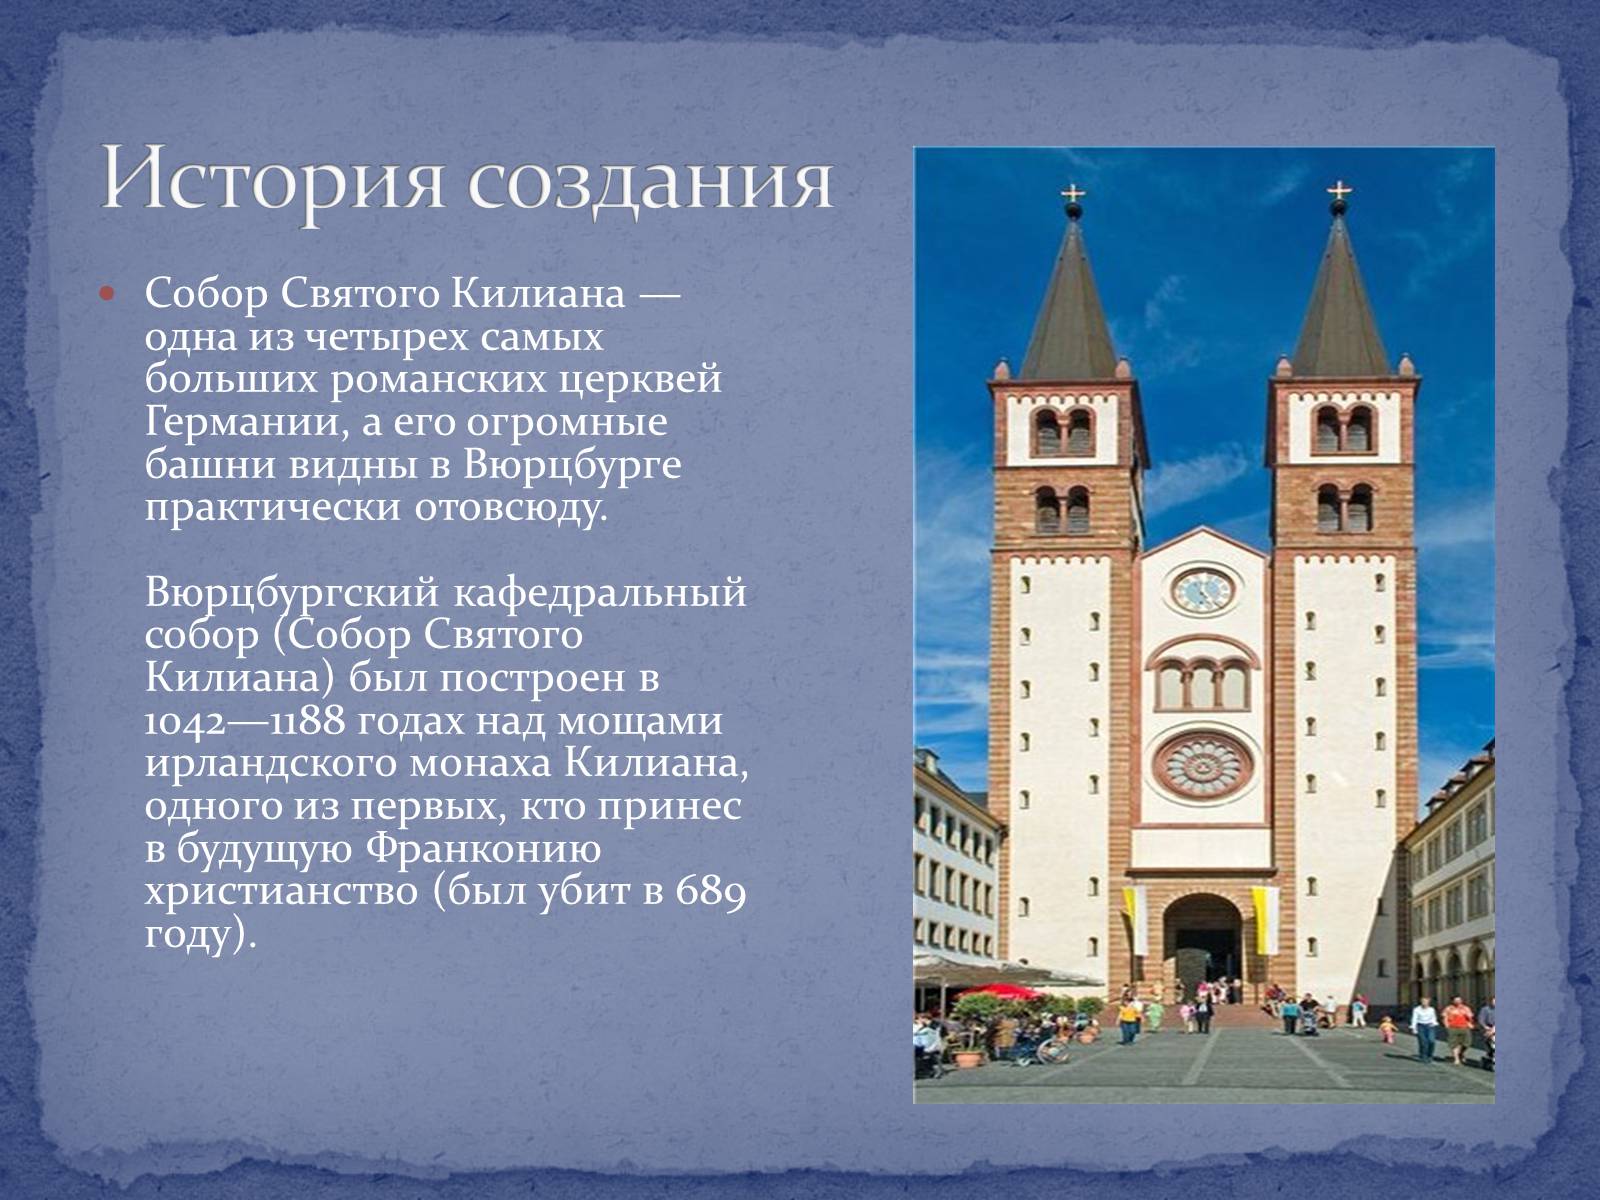 Презентація на тему «Вюрцбургский кафедральный собор» - Слайд #2